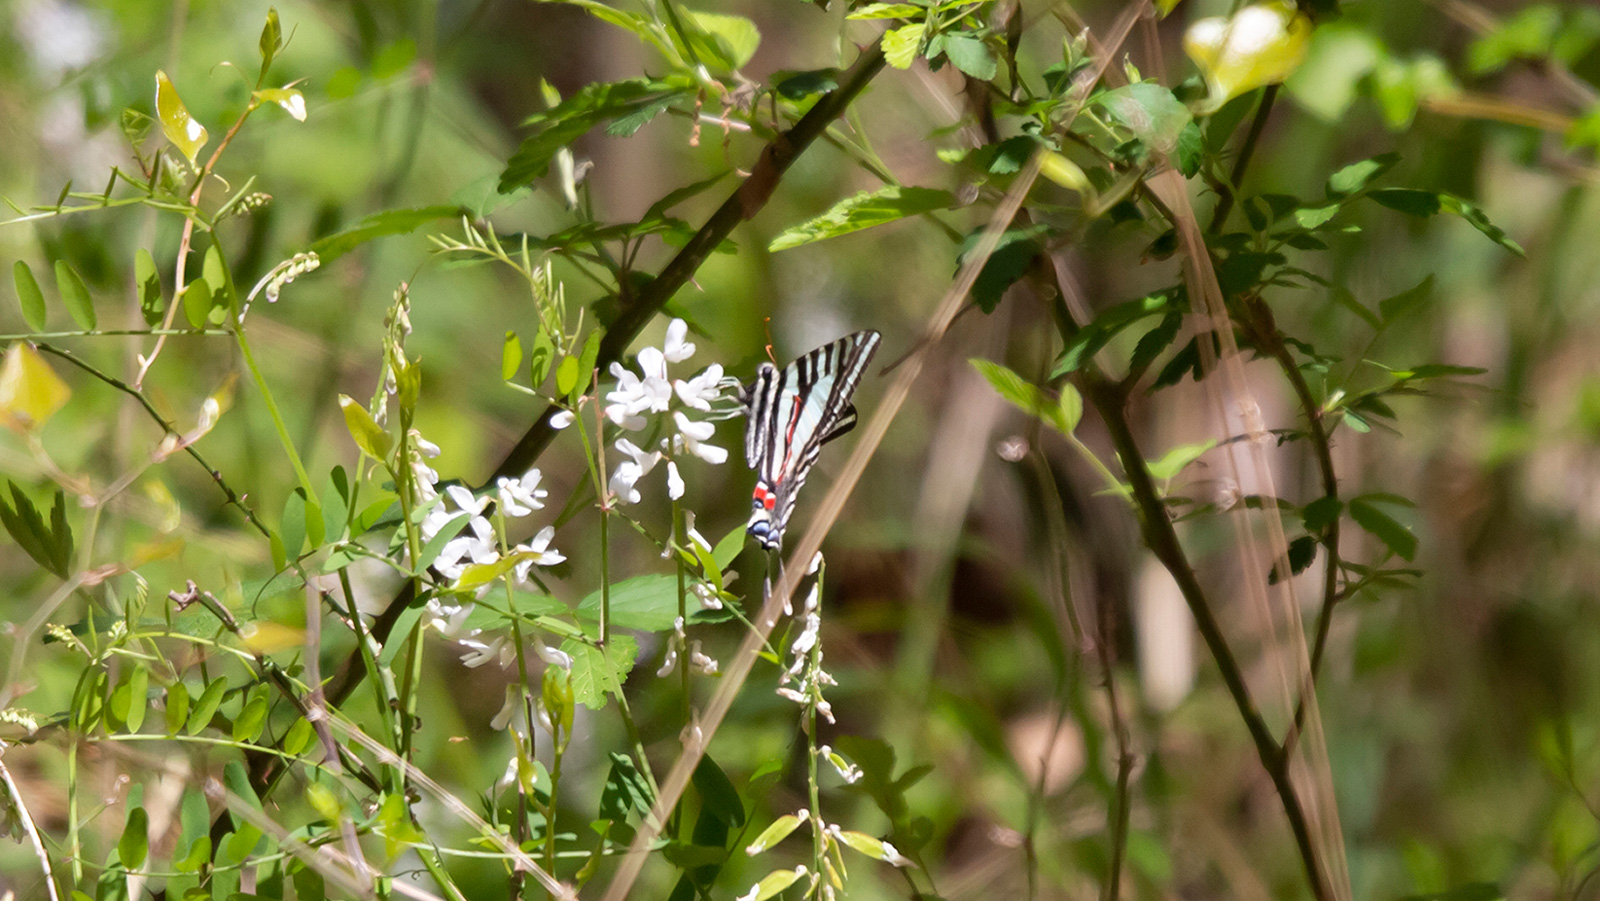 Zebra swallowtail butterfly drinking nectar